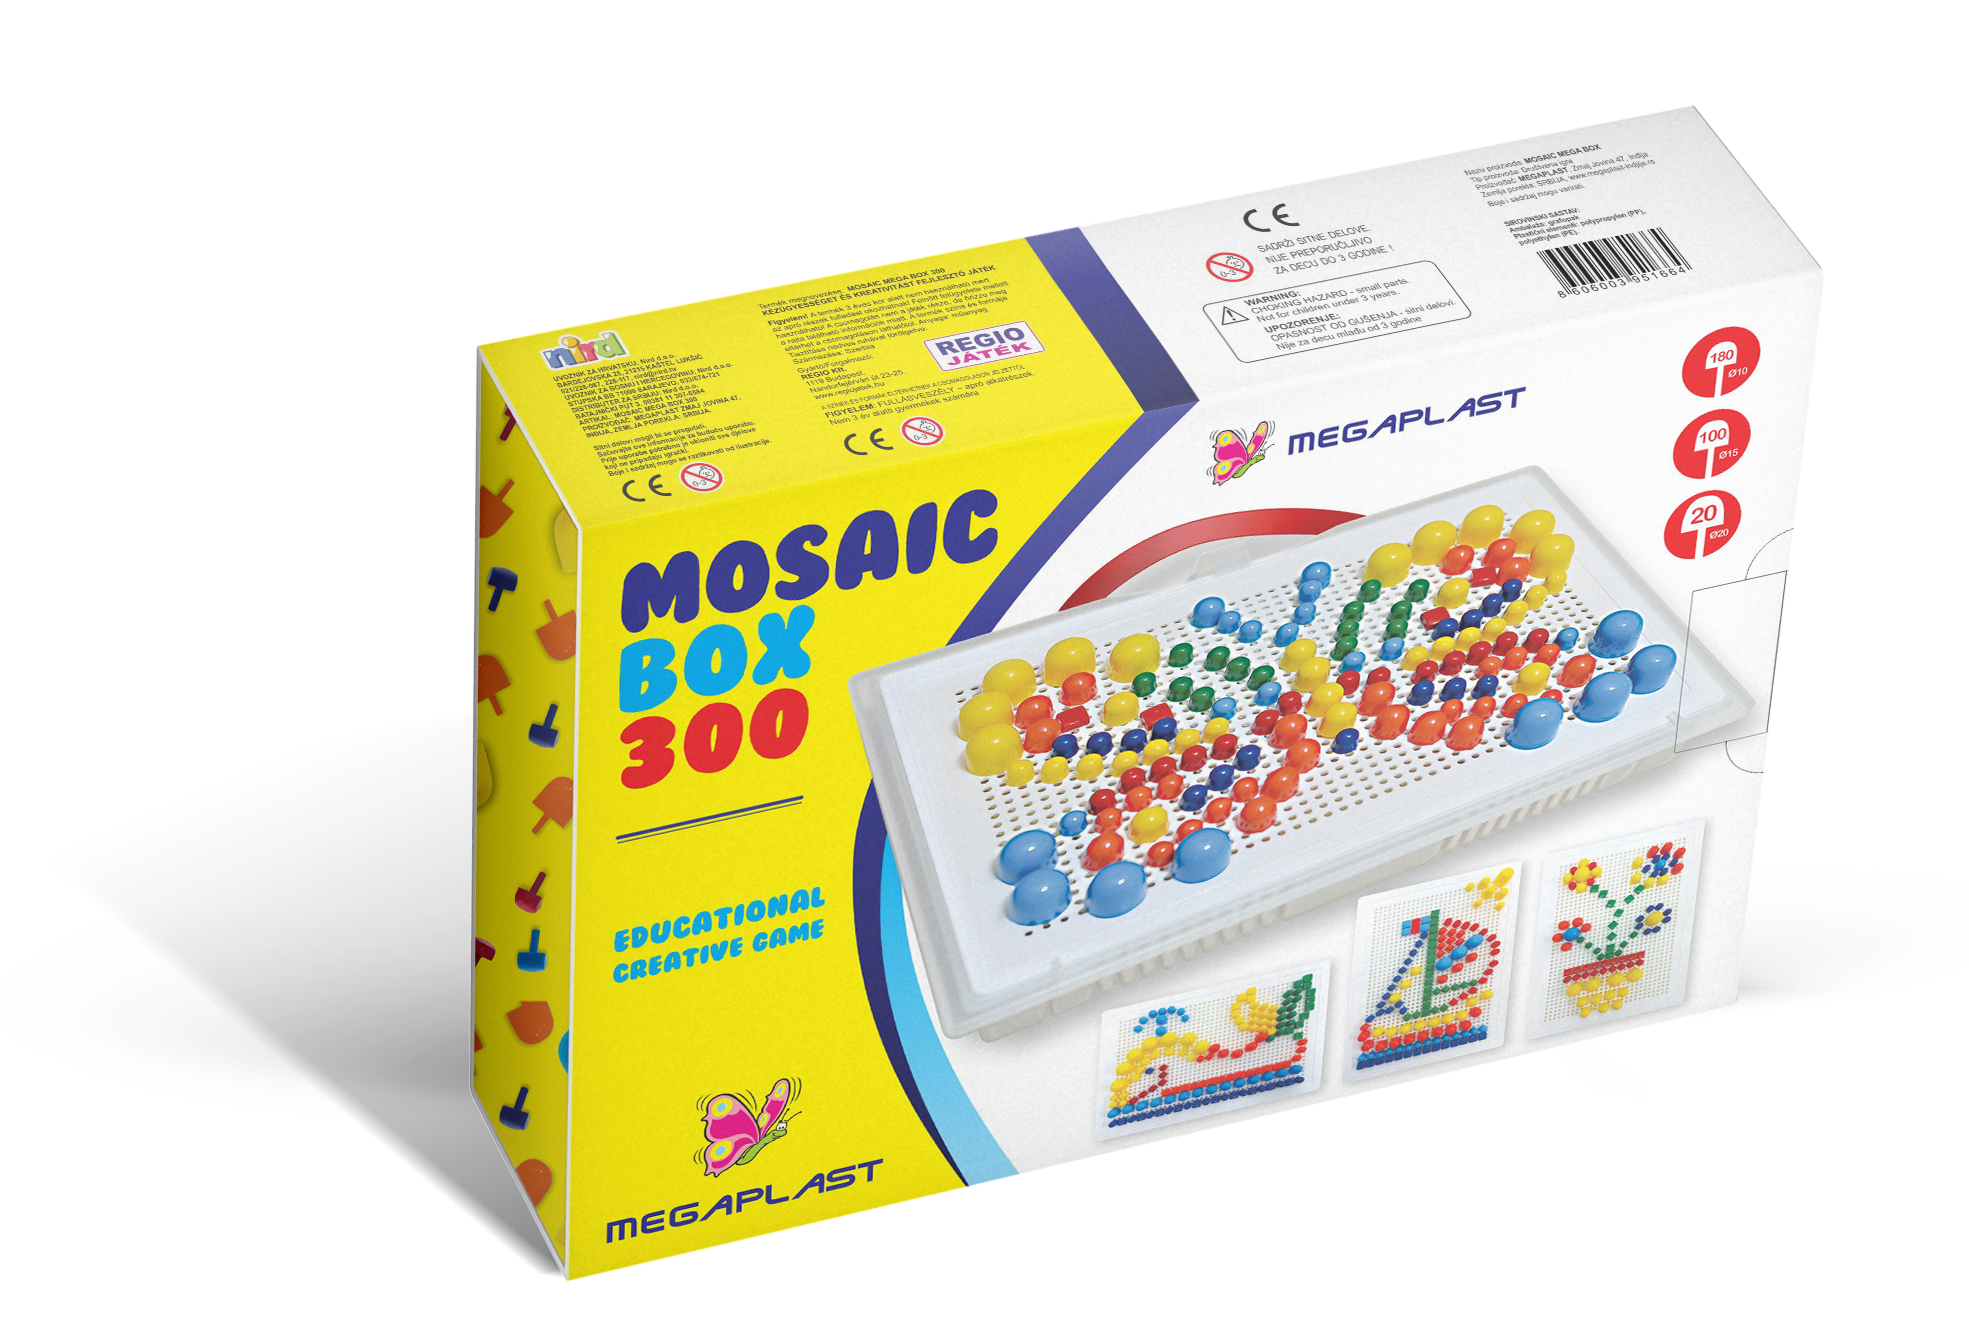 Mosaic box 300